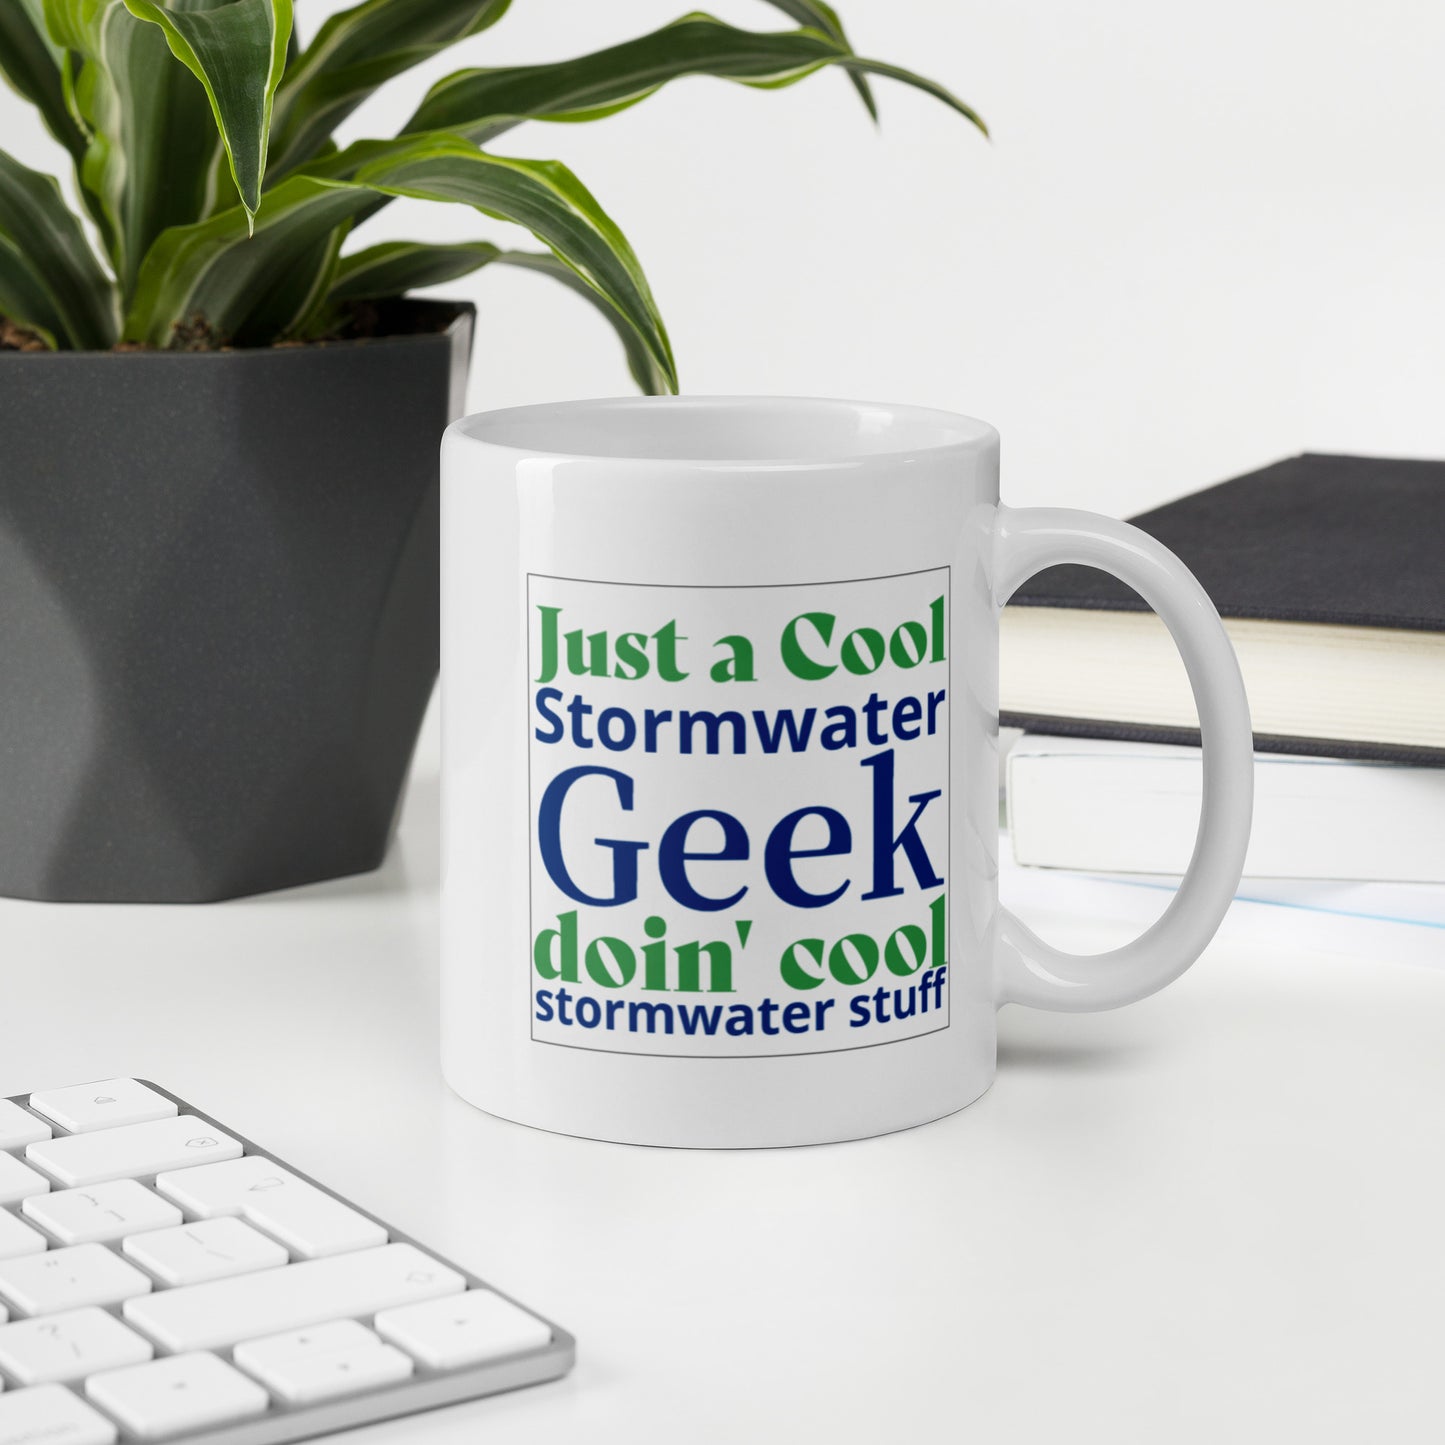 Cool Stormwater Geek (blue/green) - White glossy mug